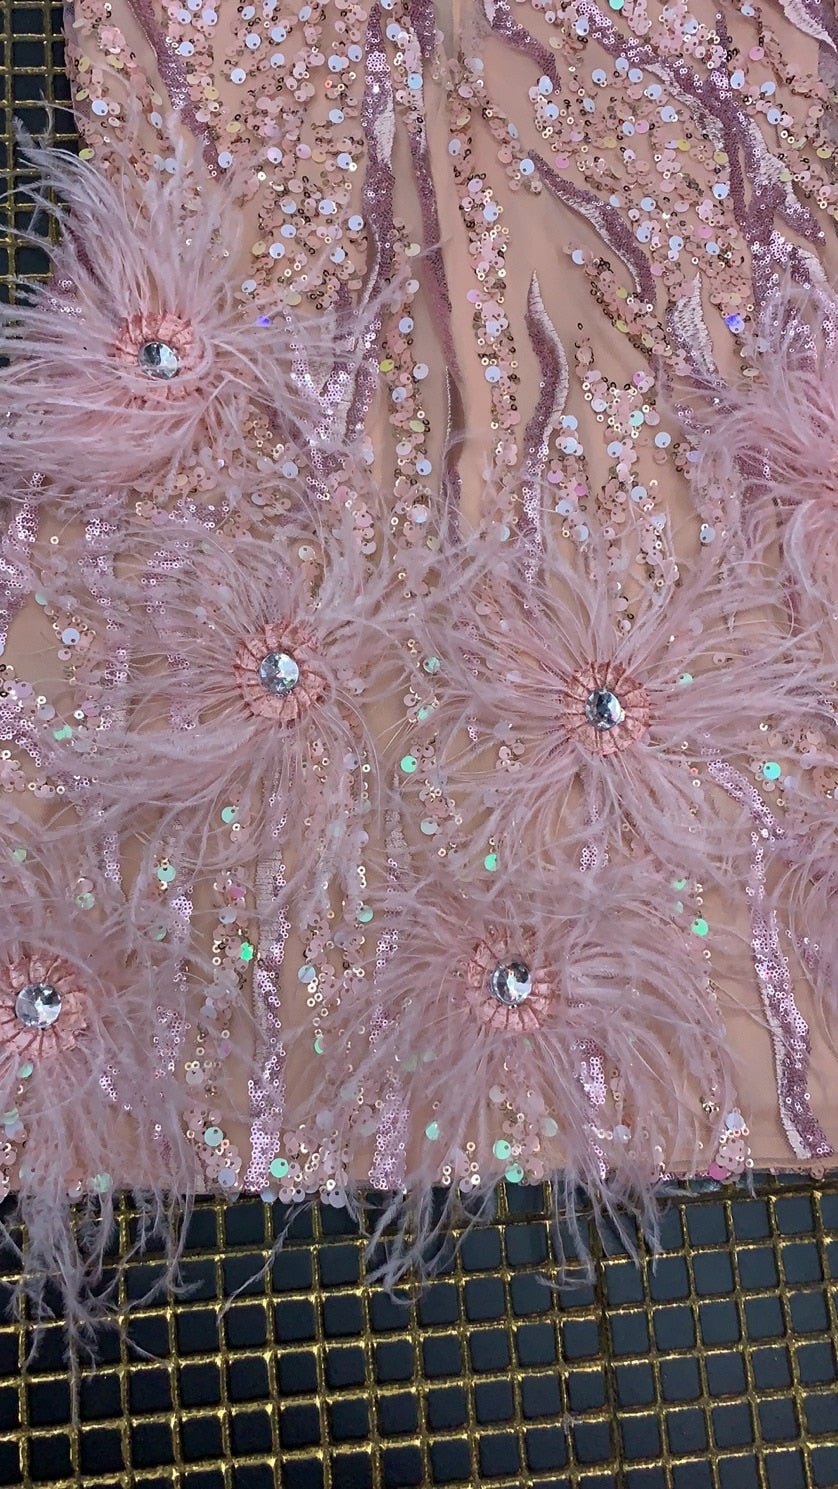 Pbong High Quality Pink Mini Feather V-neck Fashion Bodycon Dress Night Club Party Bodycon Dress